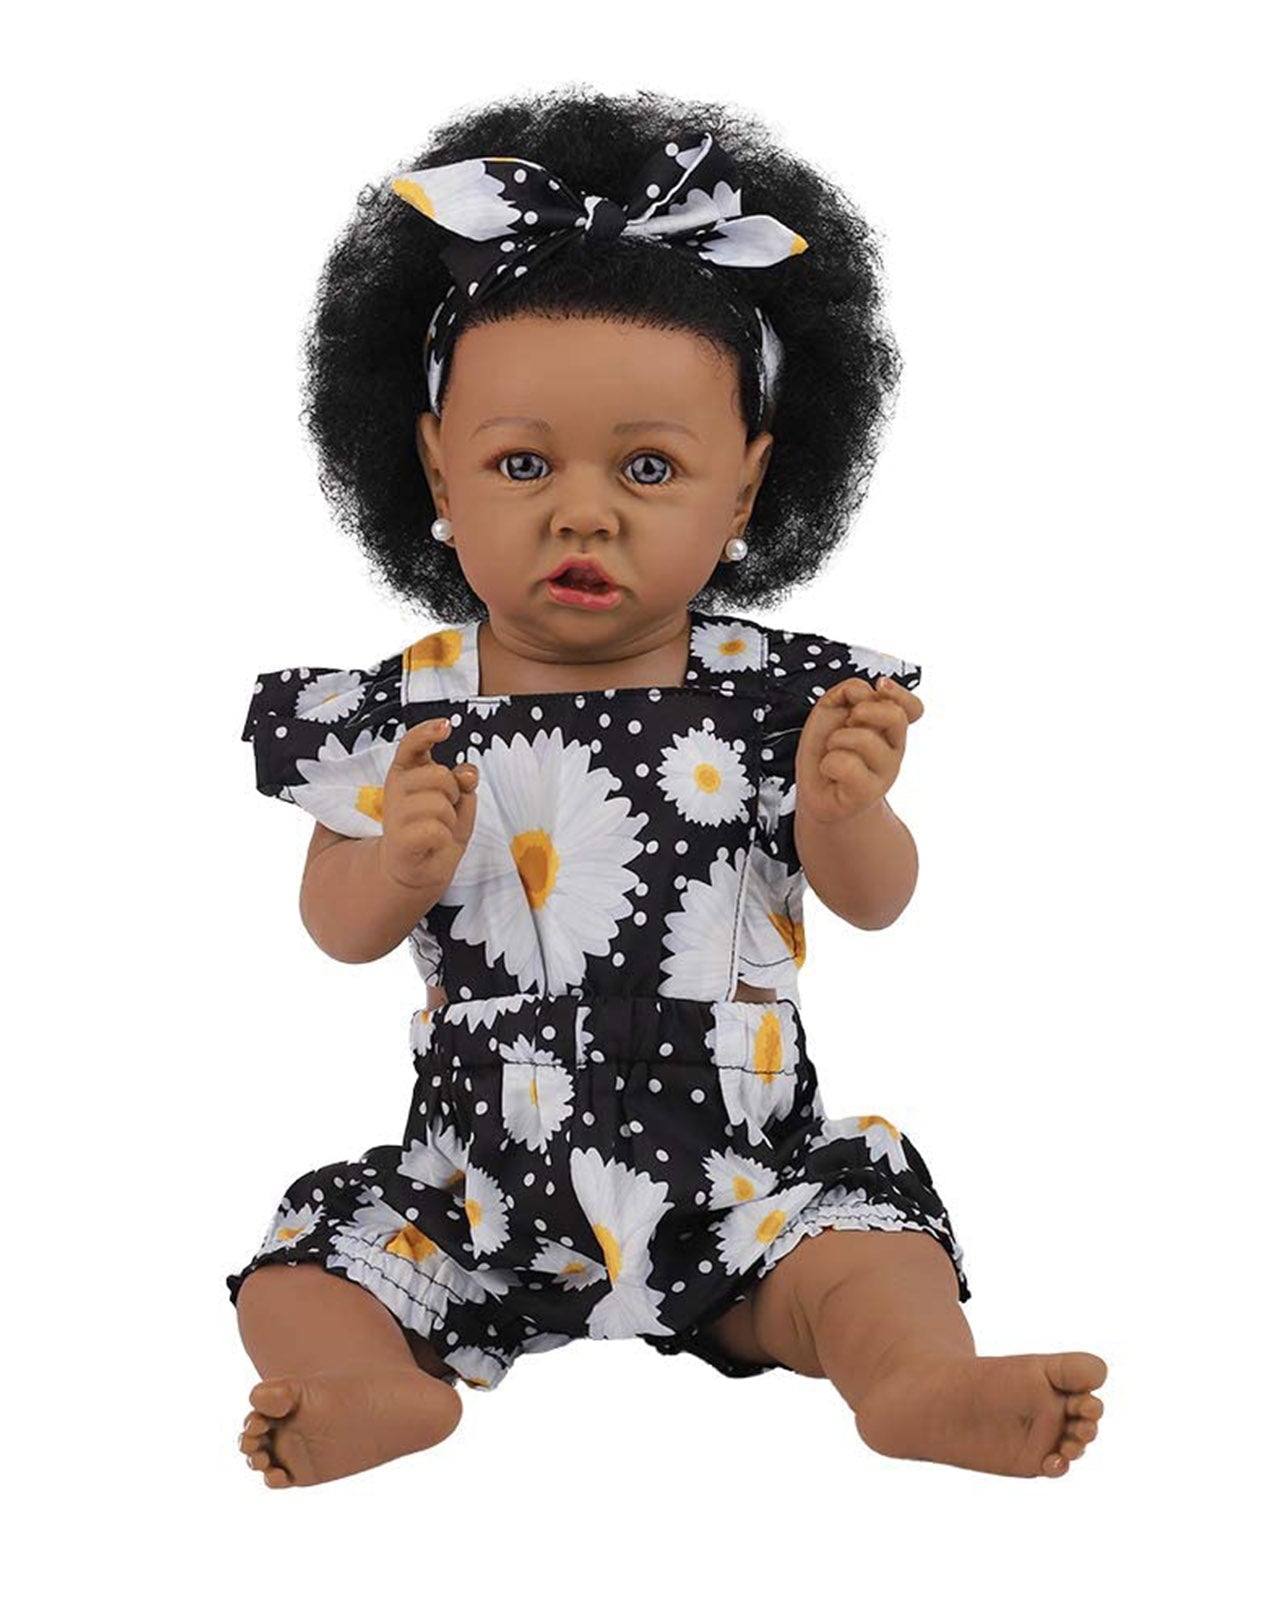 Irma - 20" Reborn Baby Dolls Cute African American Newborn Girl with Soft Body